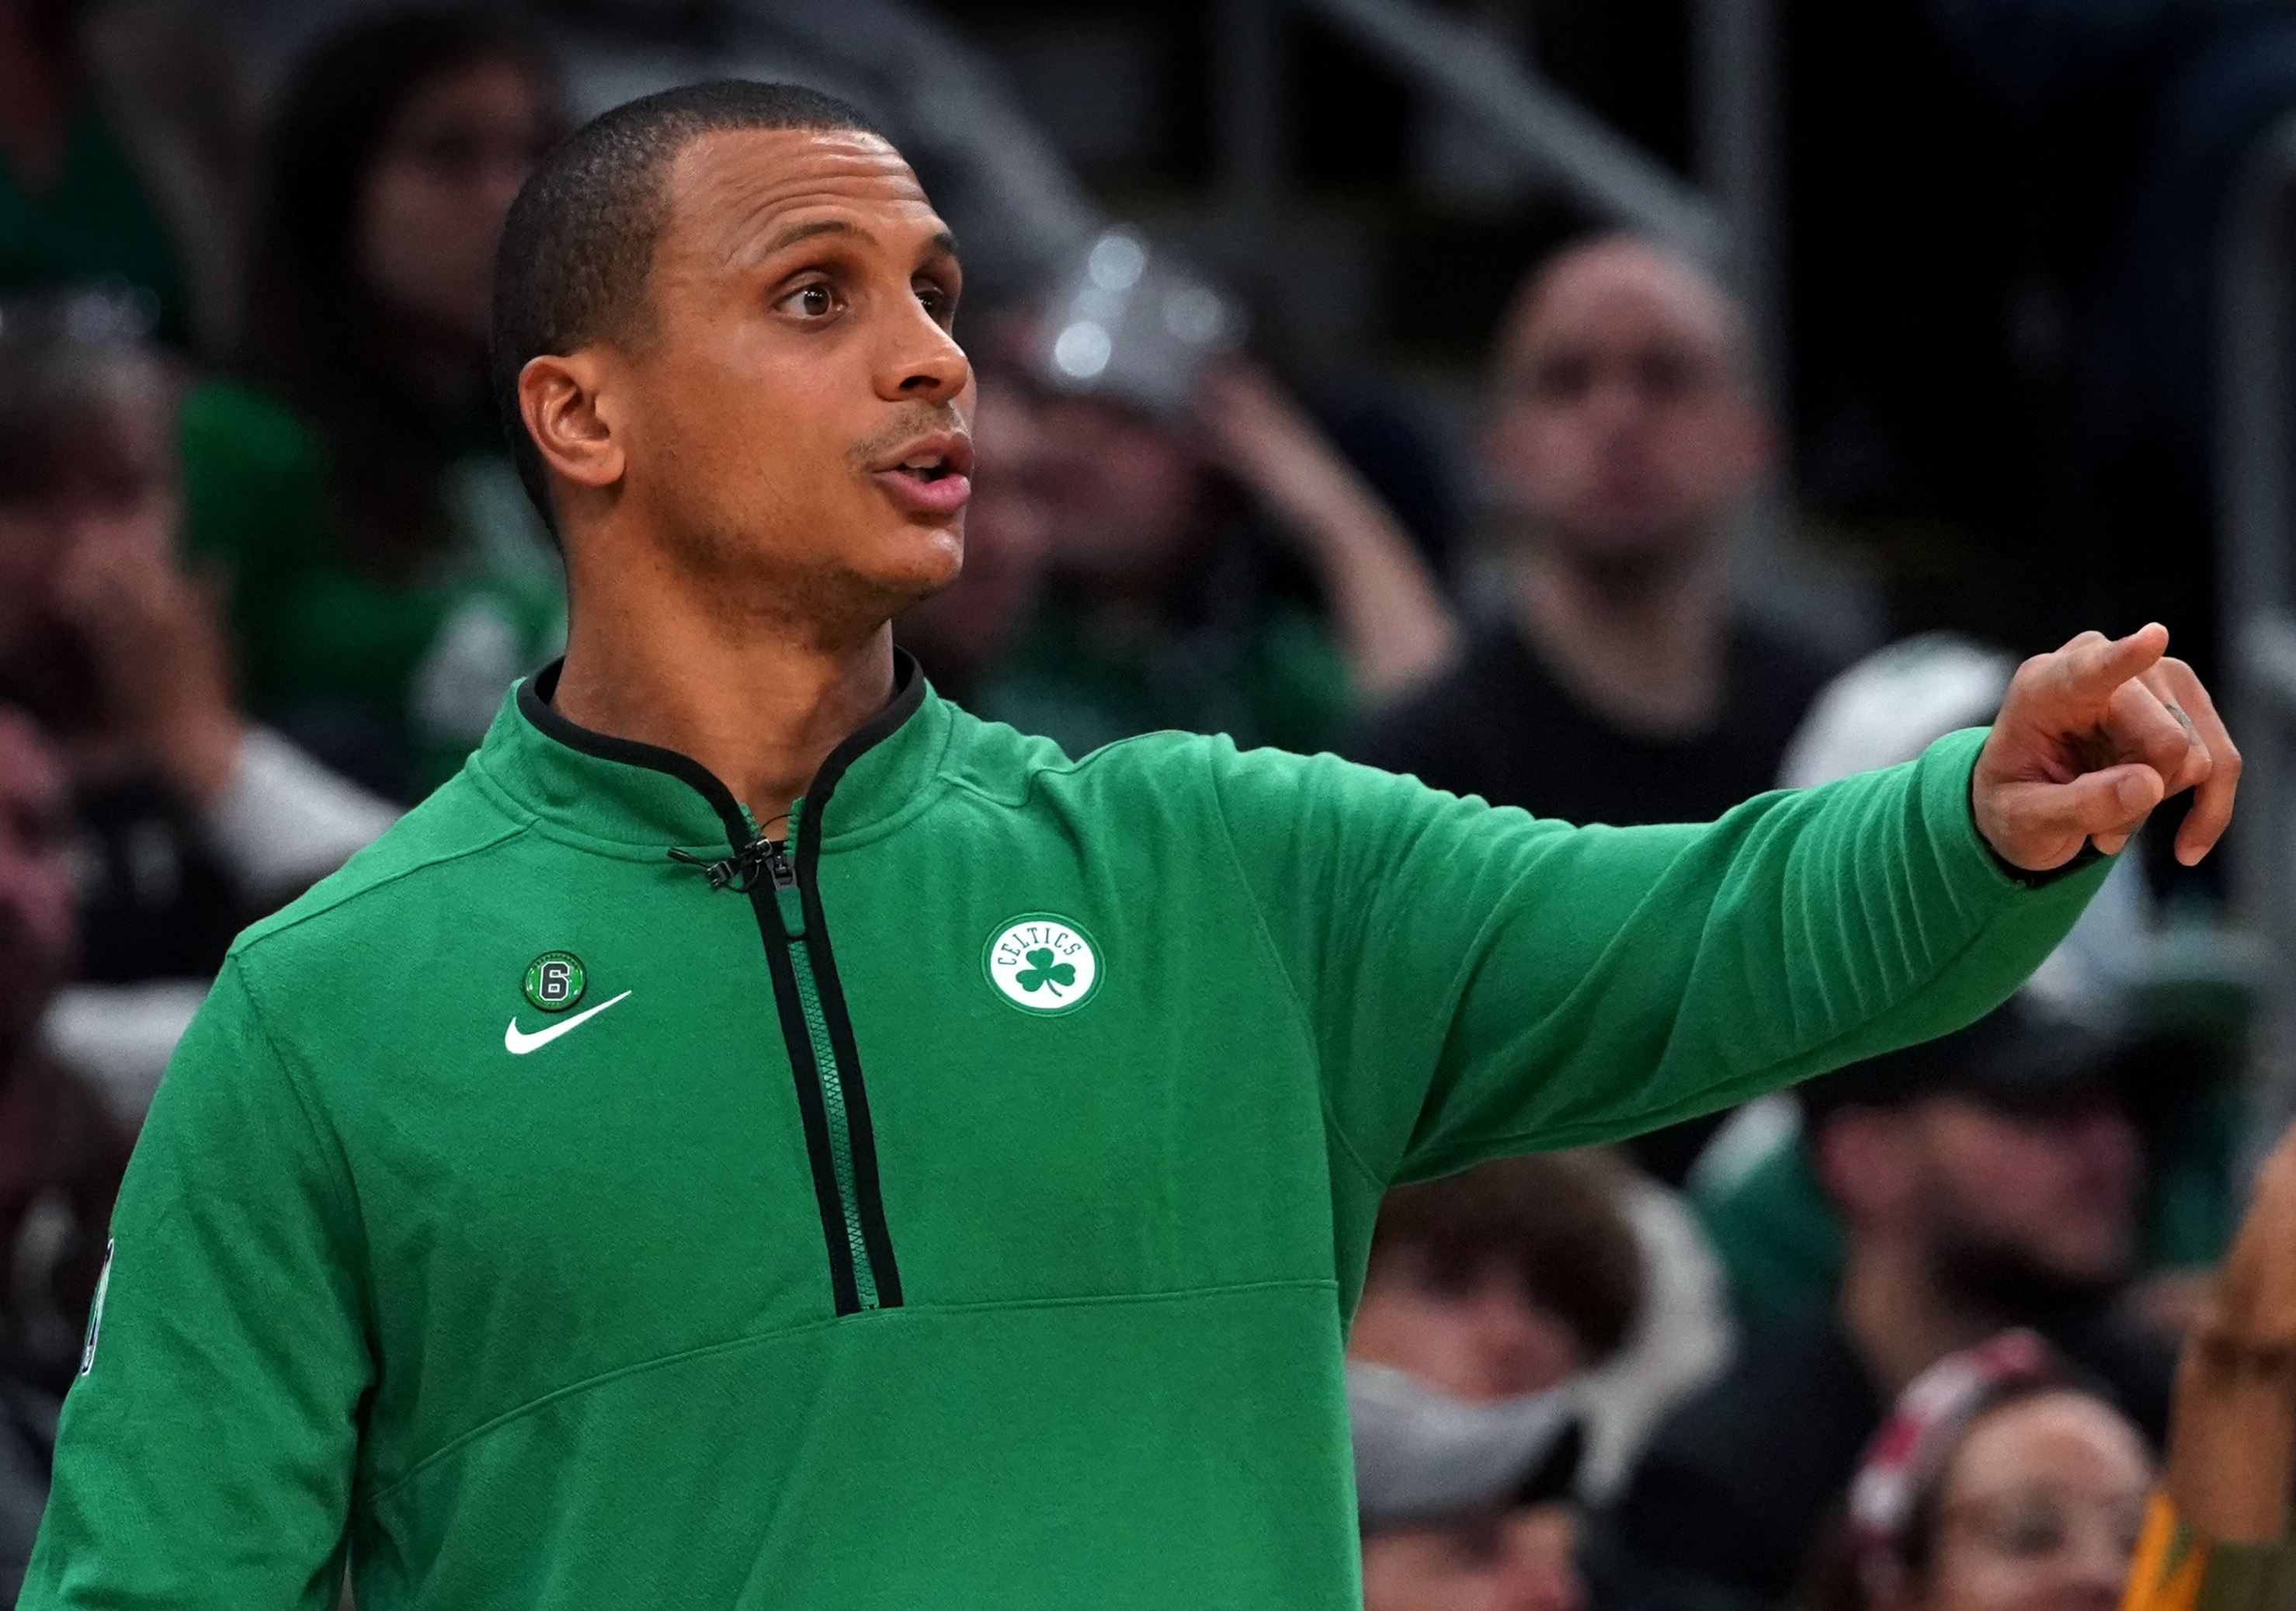 Joe Mazzulla reveals why Celtics won't name a captain this season